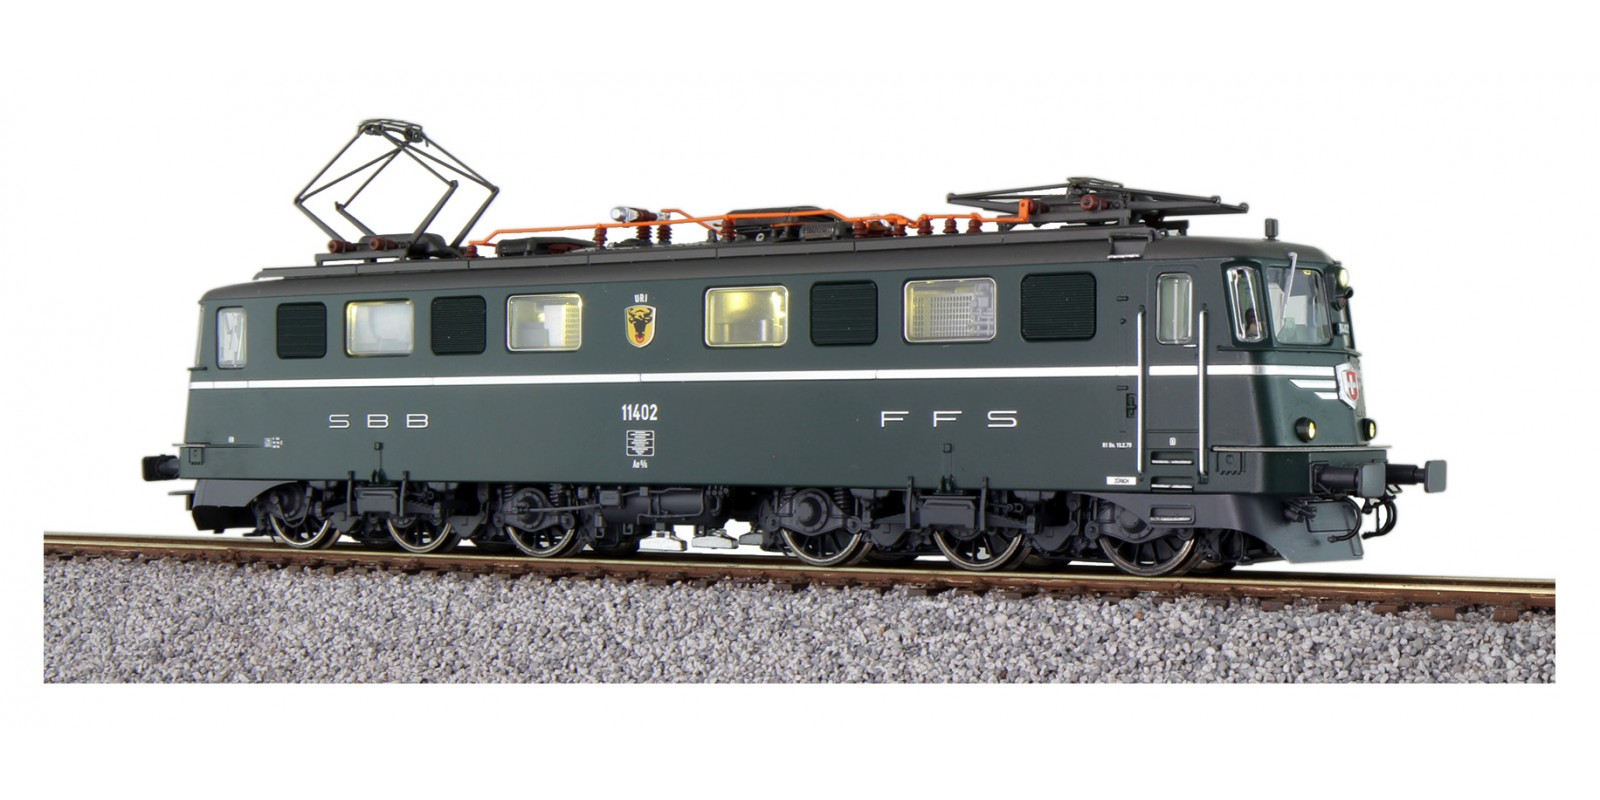 ES31530 Gauge H0 Electric locomotive AE6/6, 11402 "Uri" of the SBB, era IV with sound